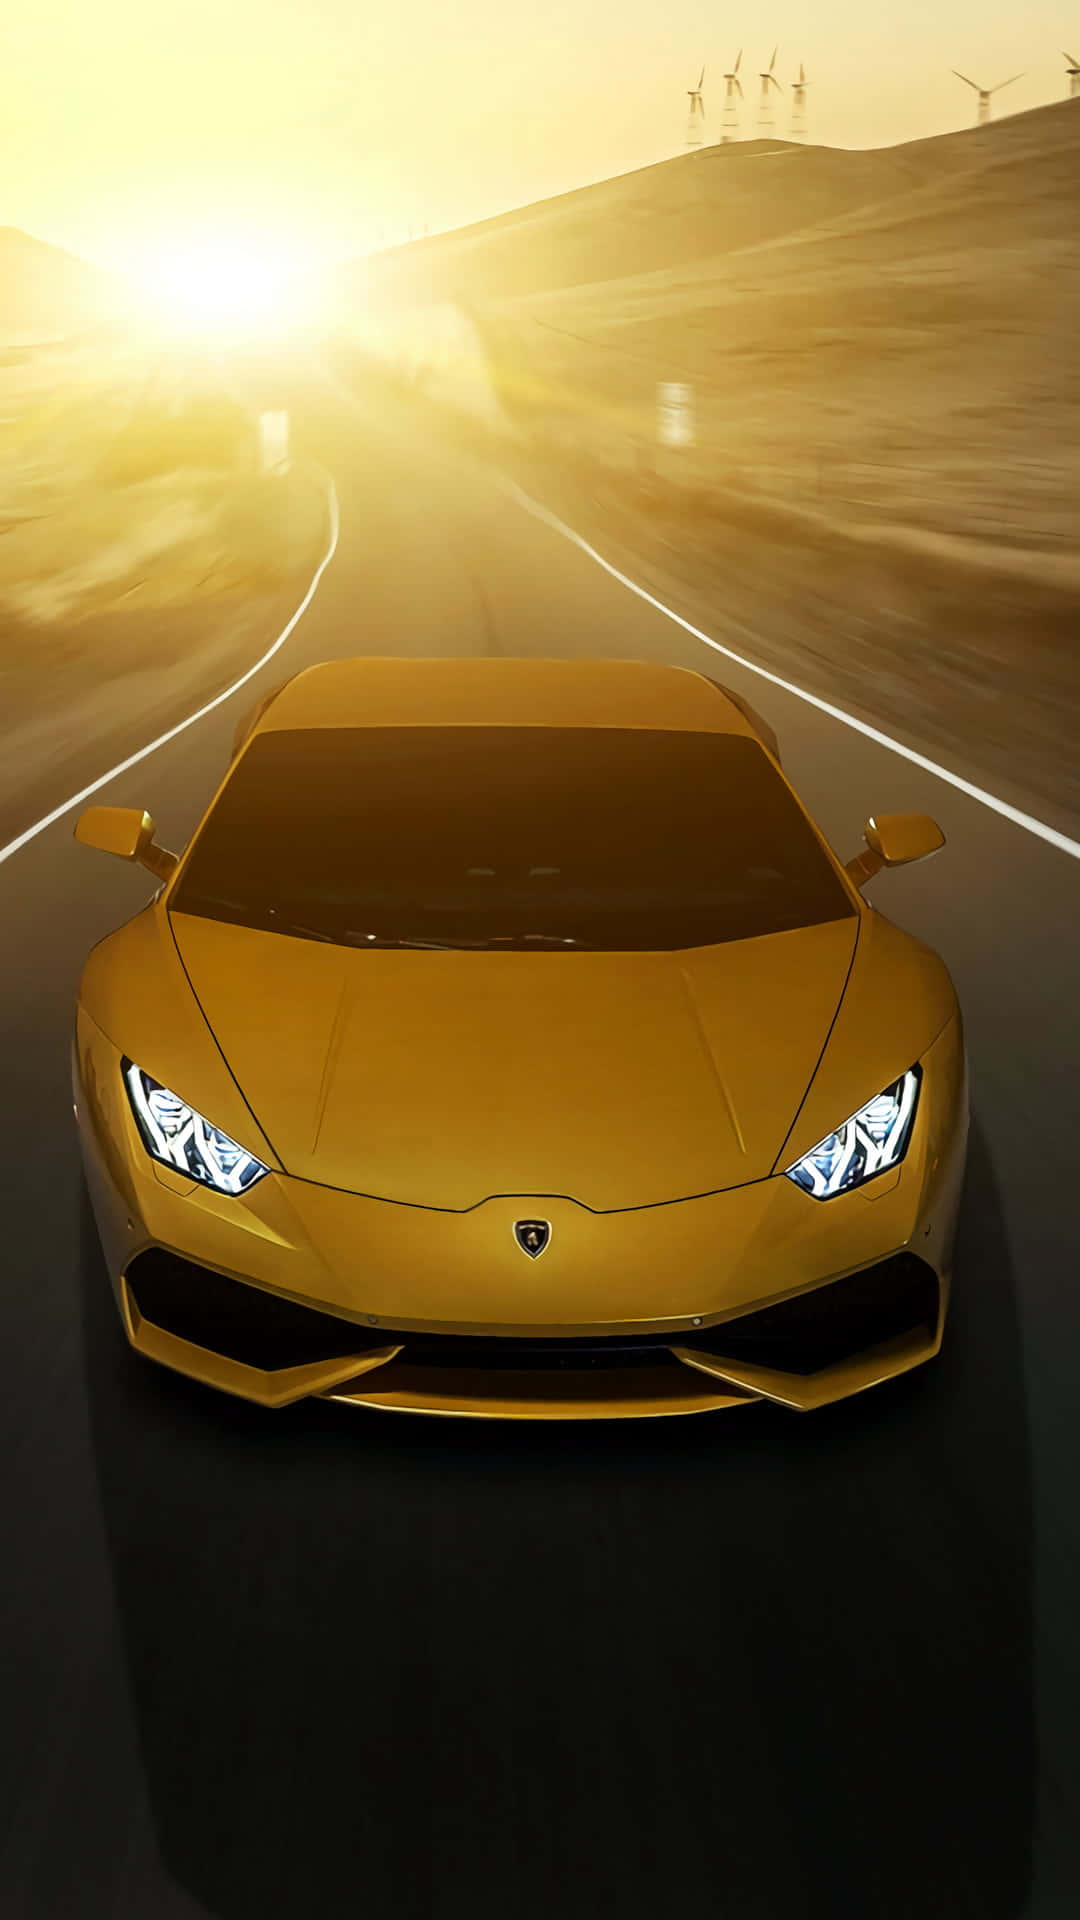 Yet another rare sight, the golden Lamborghini Wallpaper